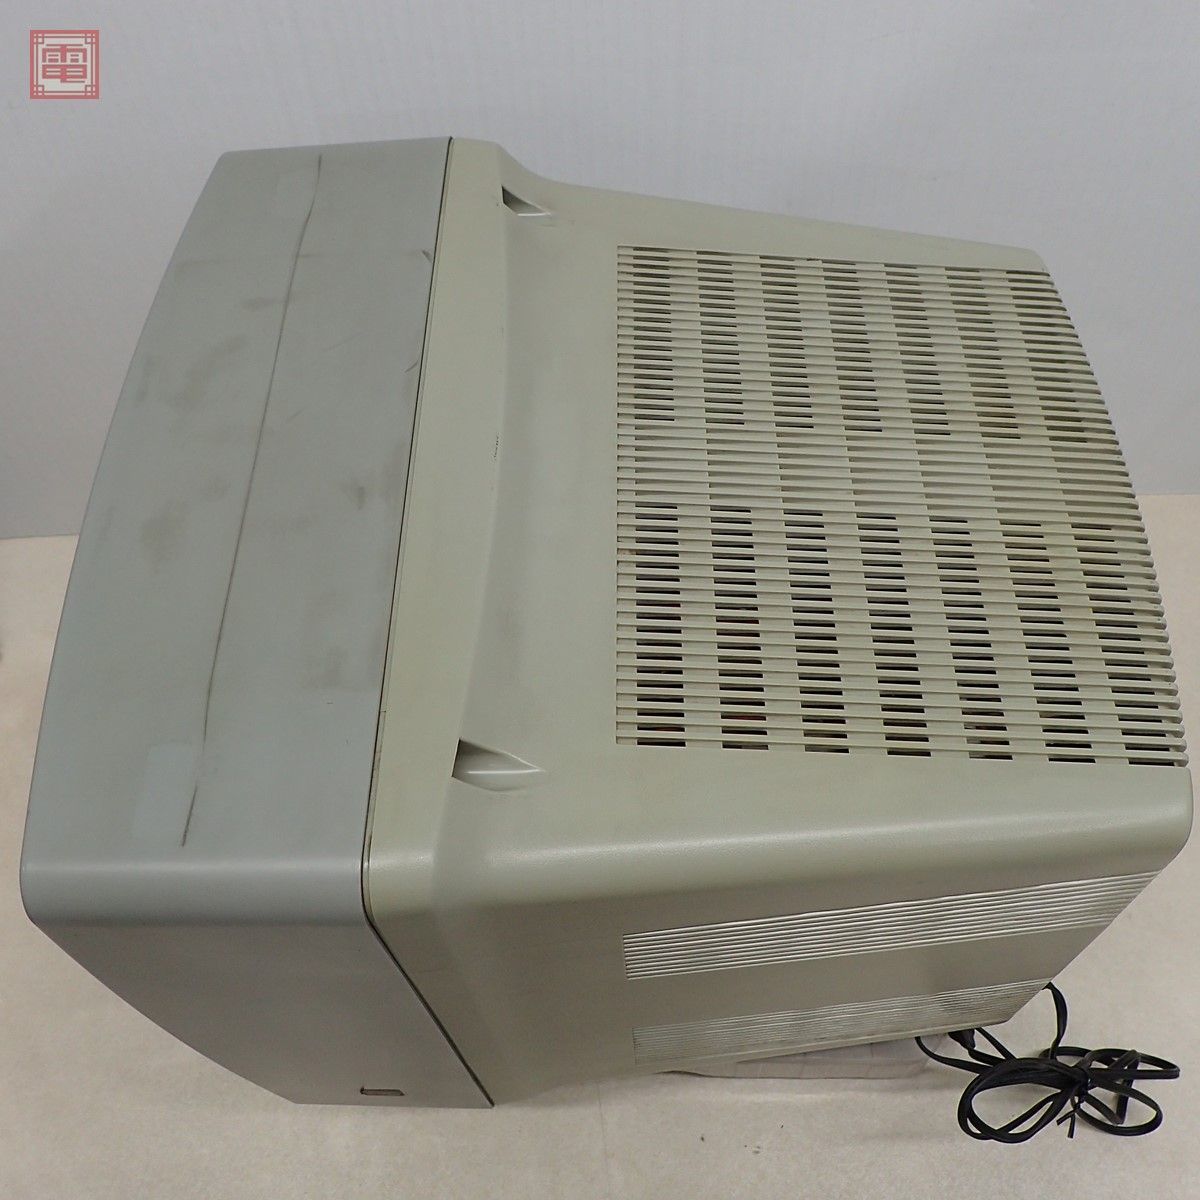 X68000・MSX等 SHARP モニター CZ-602D-GY 本体 リモコン・回転台座付 ブラウン管モニター CRTモニター シャープ 現状品【60_画像6